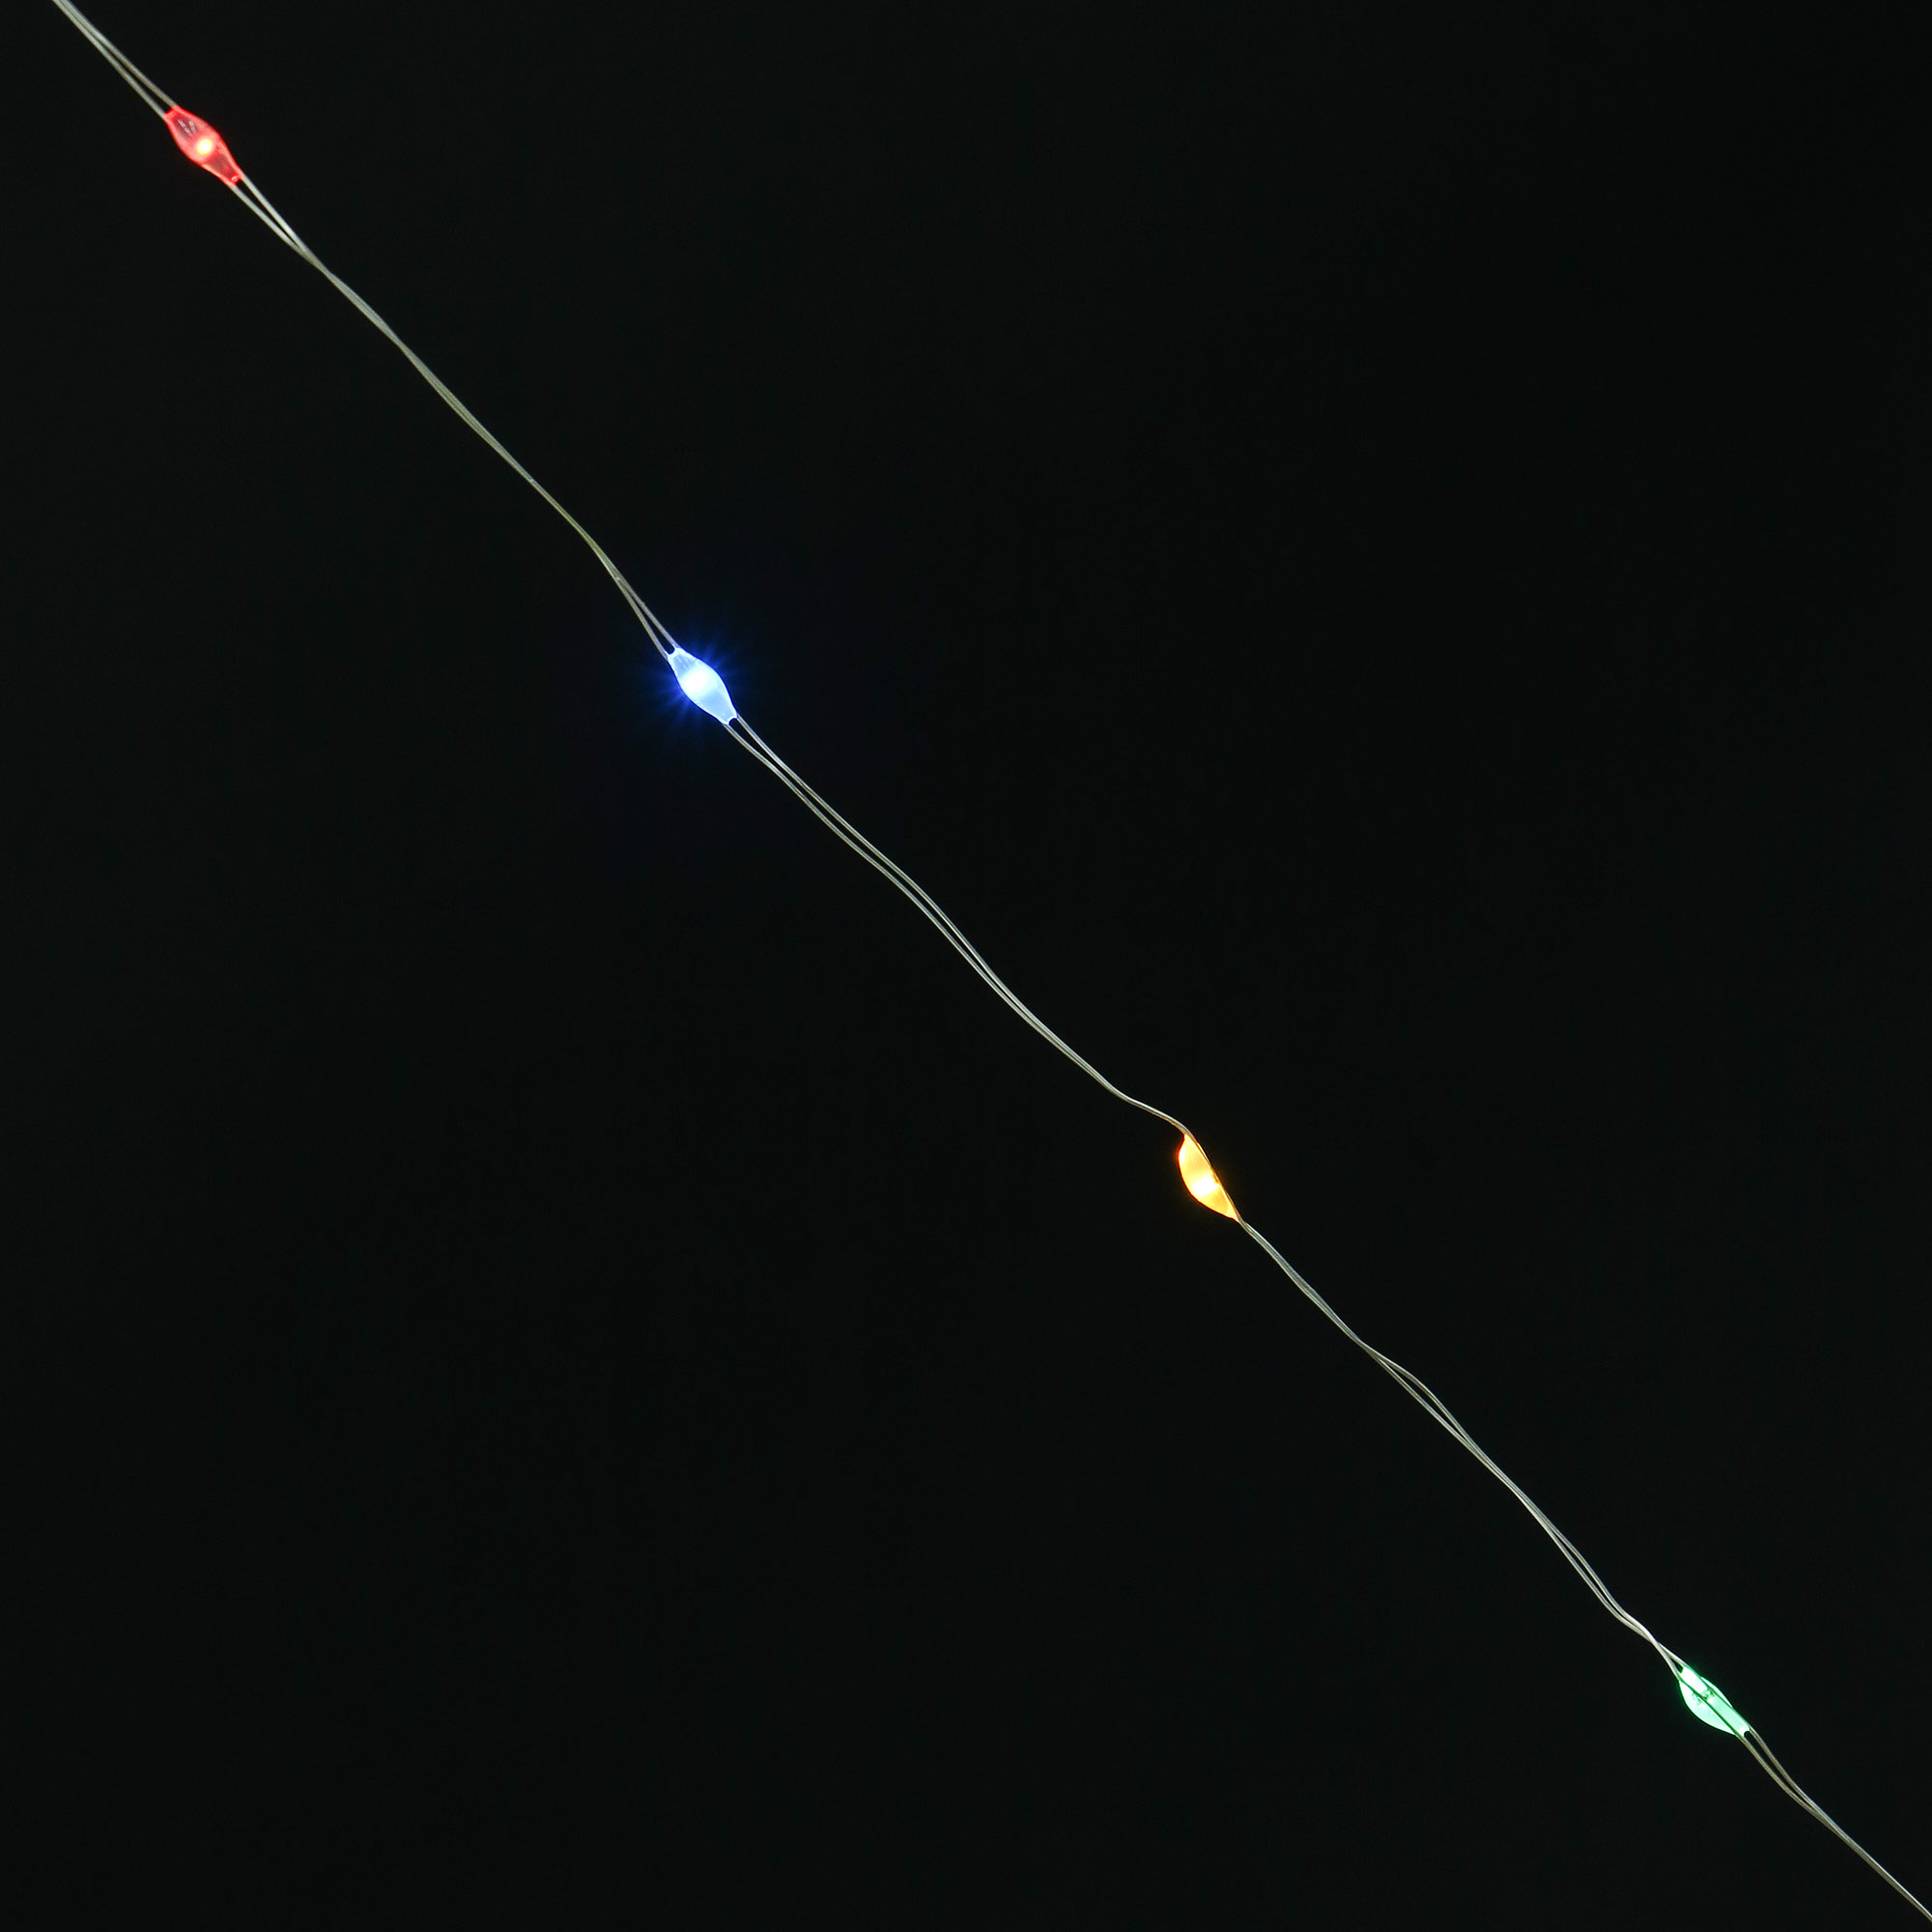 Гирлянда светящаяся Kaemingk 495см 100led, цвет белый кабель - фото 2